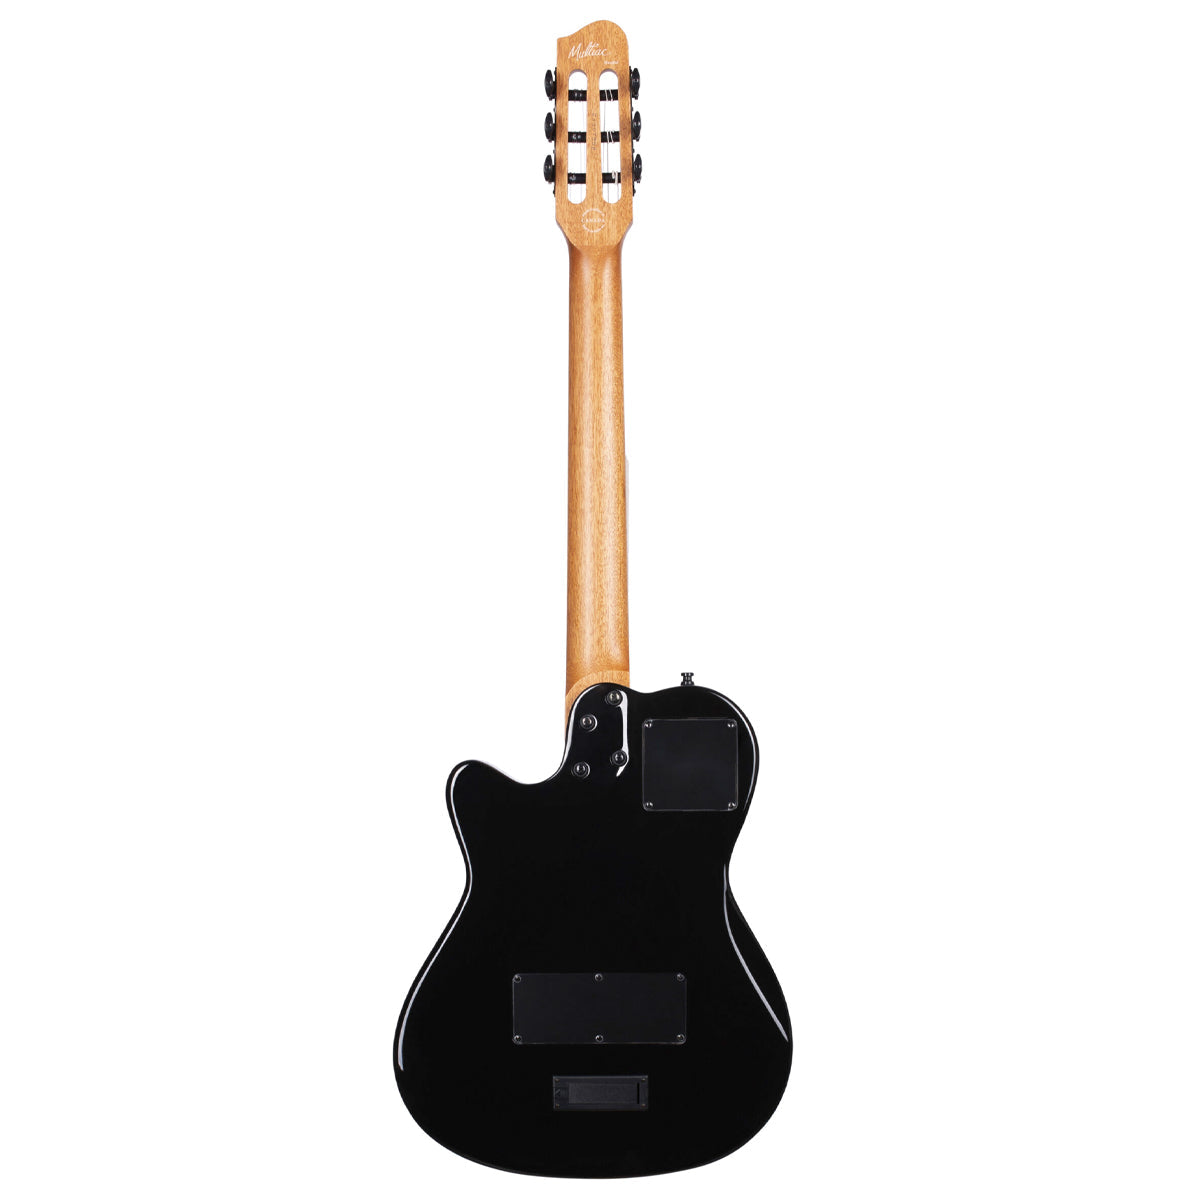 Godin Multiac Mundial Electric Guitar ~ Onyx Black, Electric Guitars for sale at Richards Guitars.